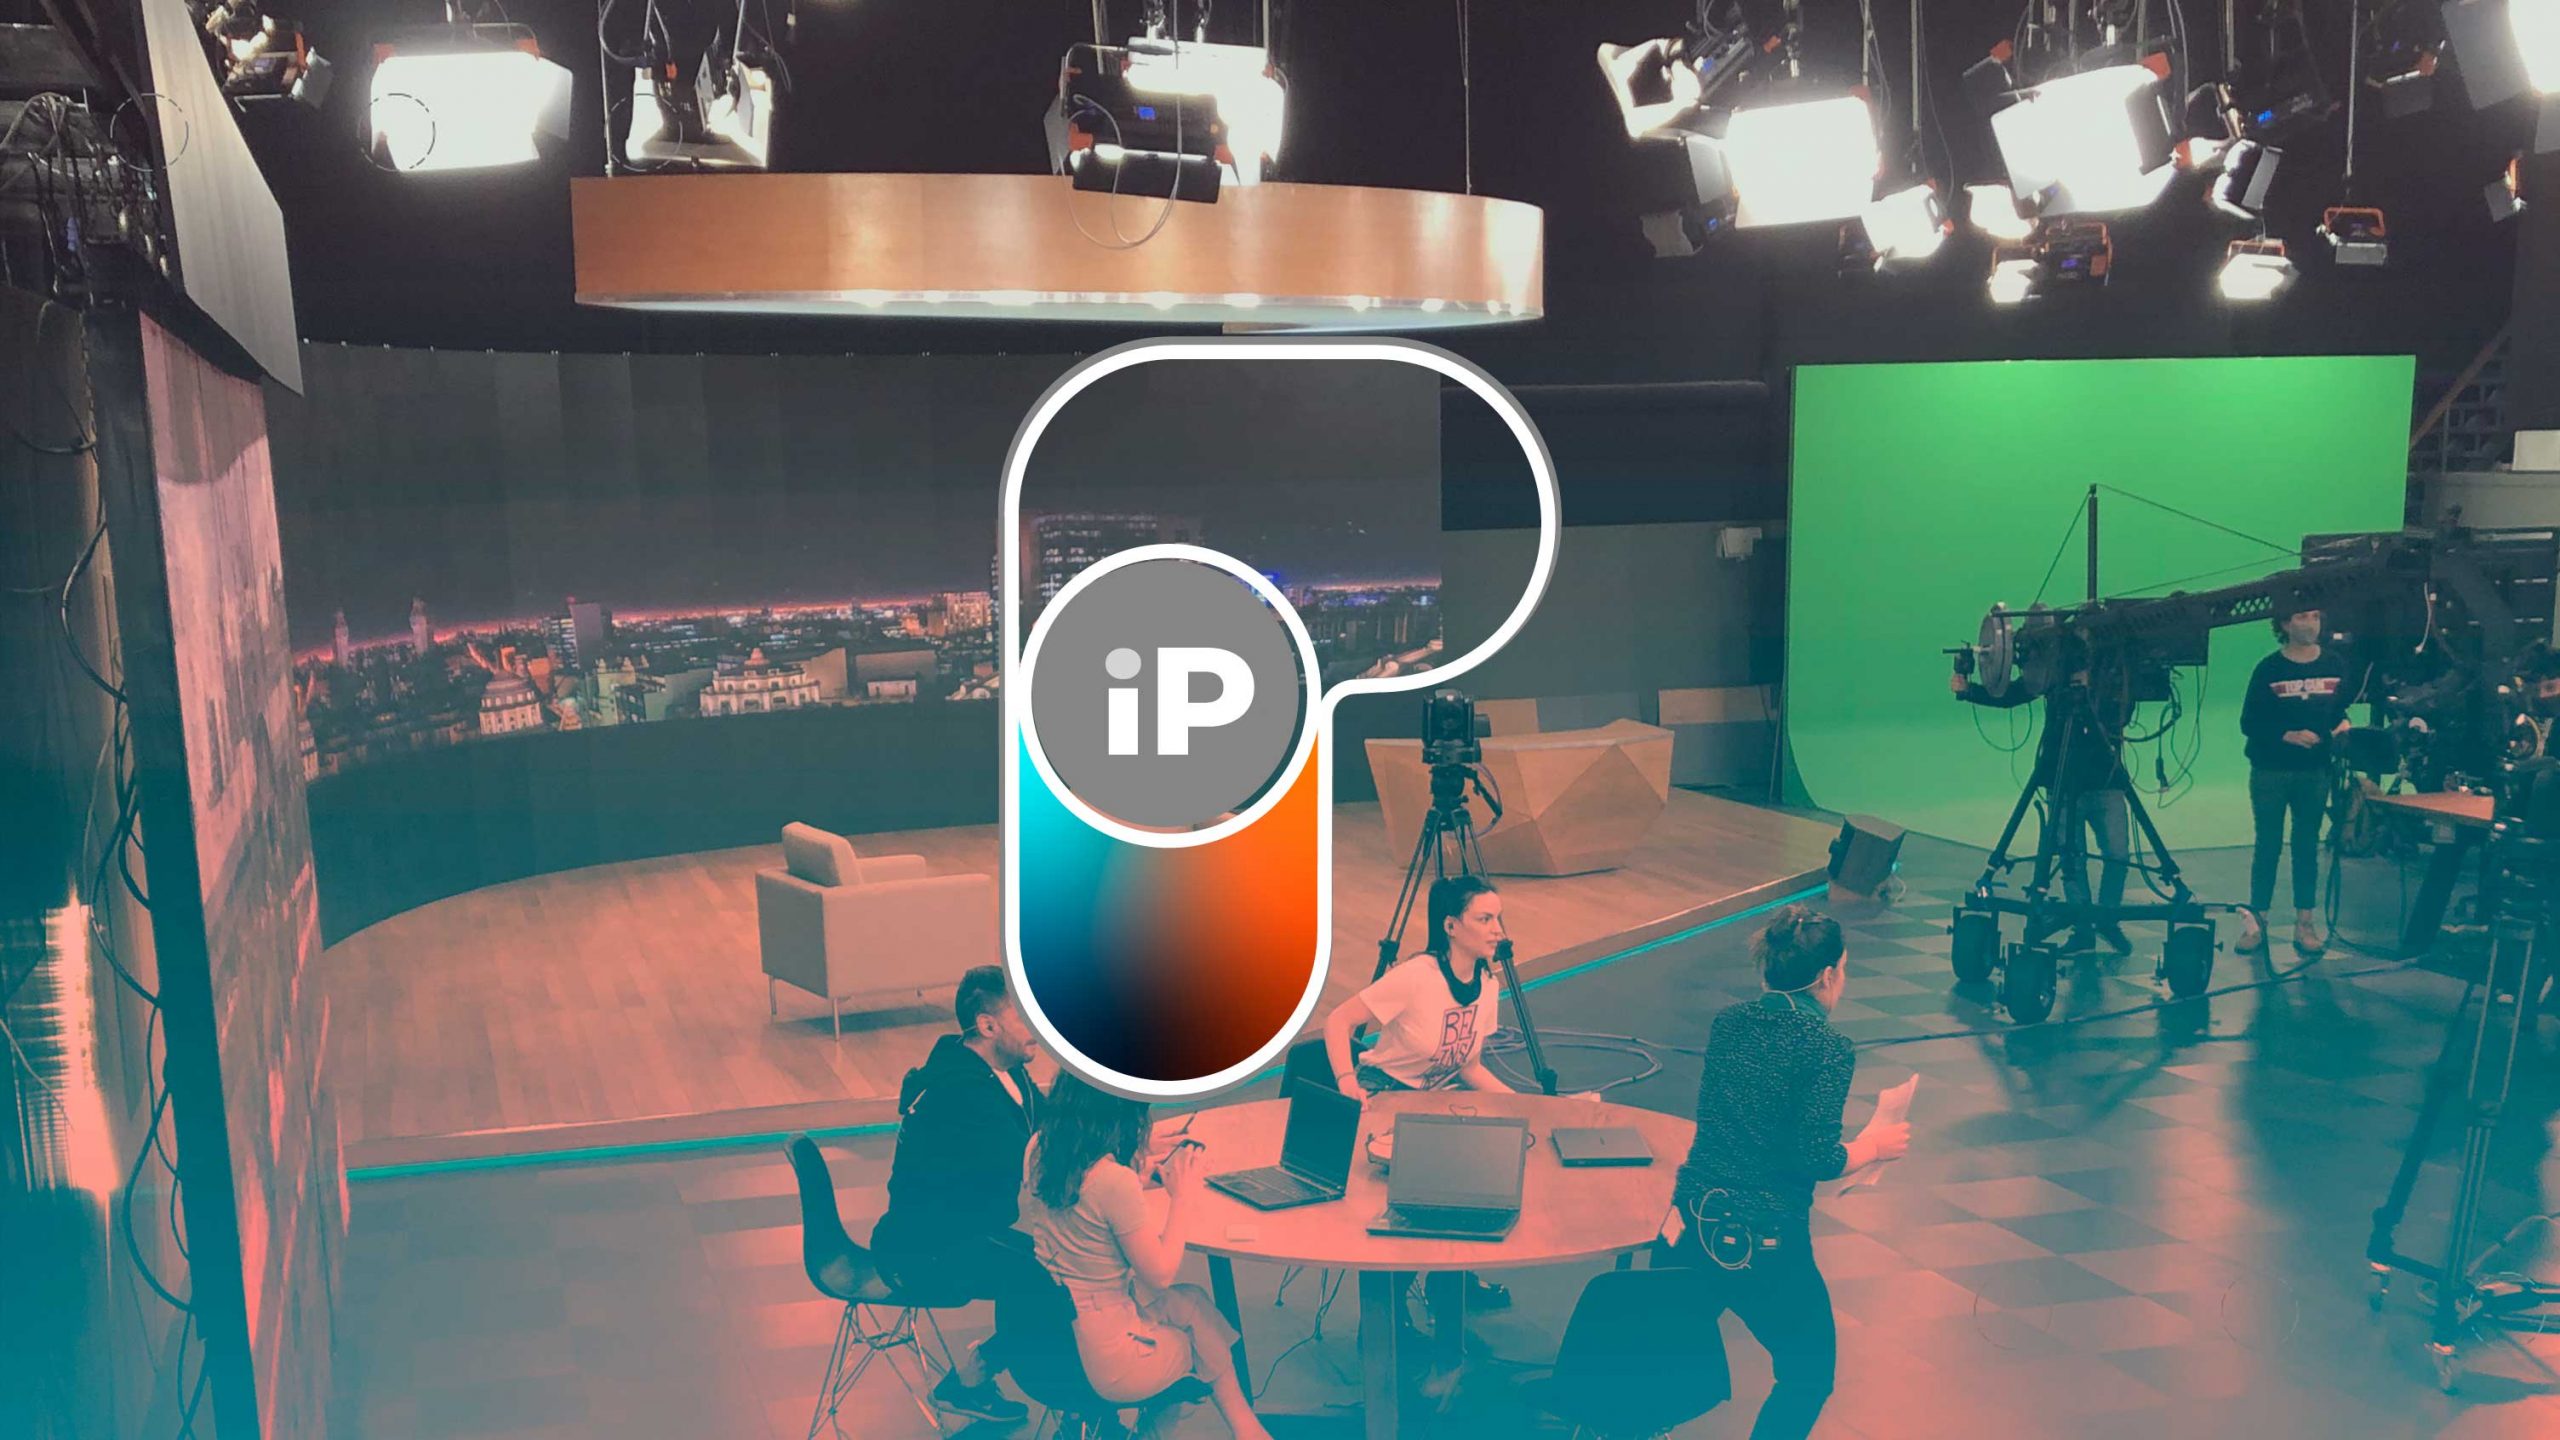 IP news channel